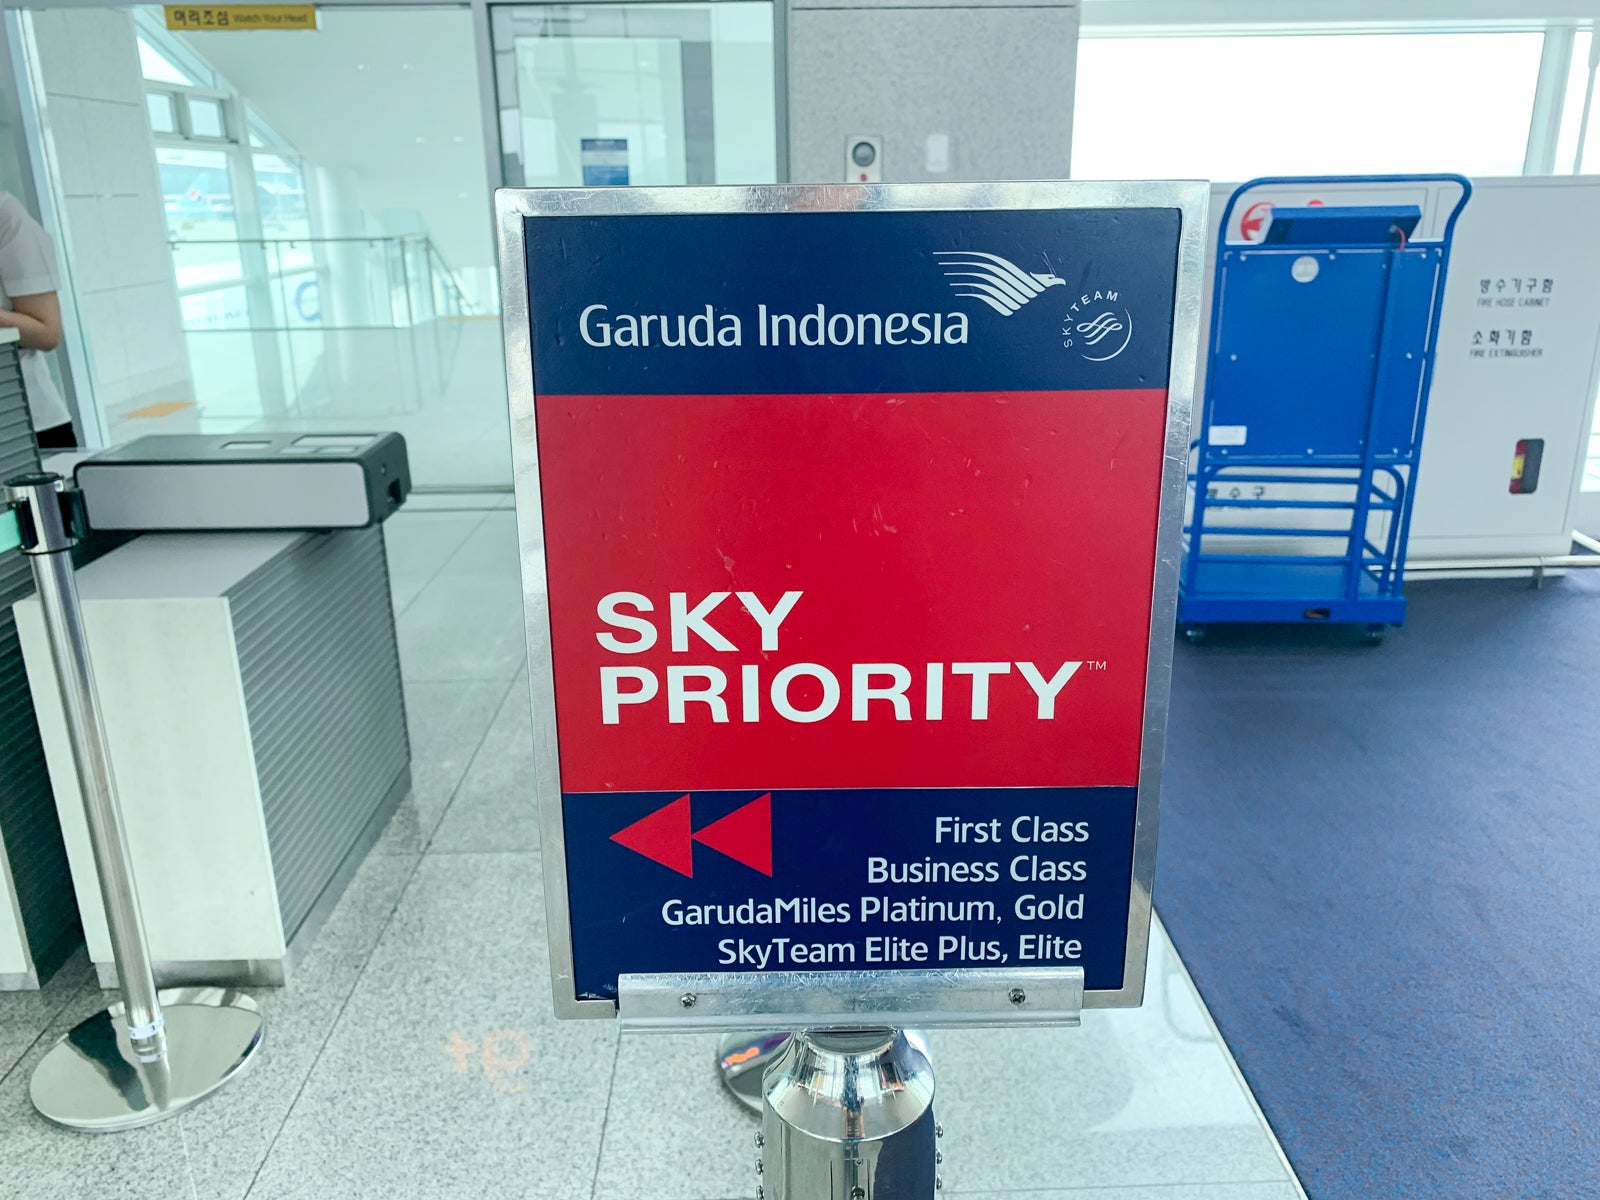 Garuda Indonesia Sky Priority sign